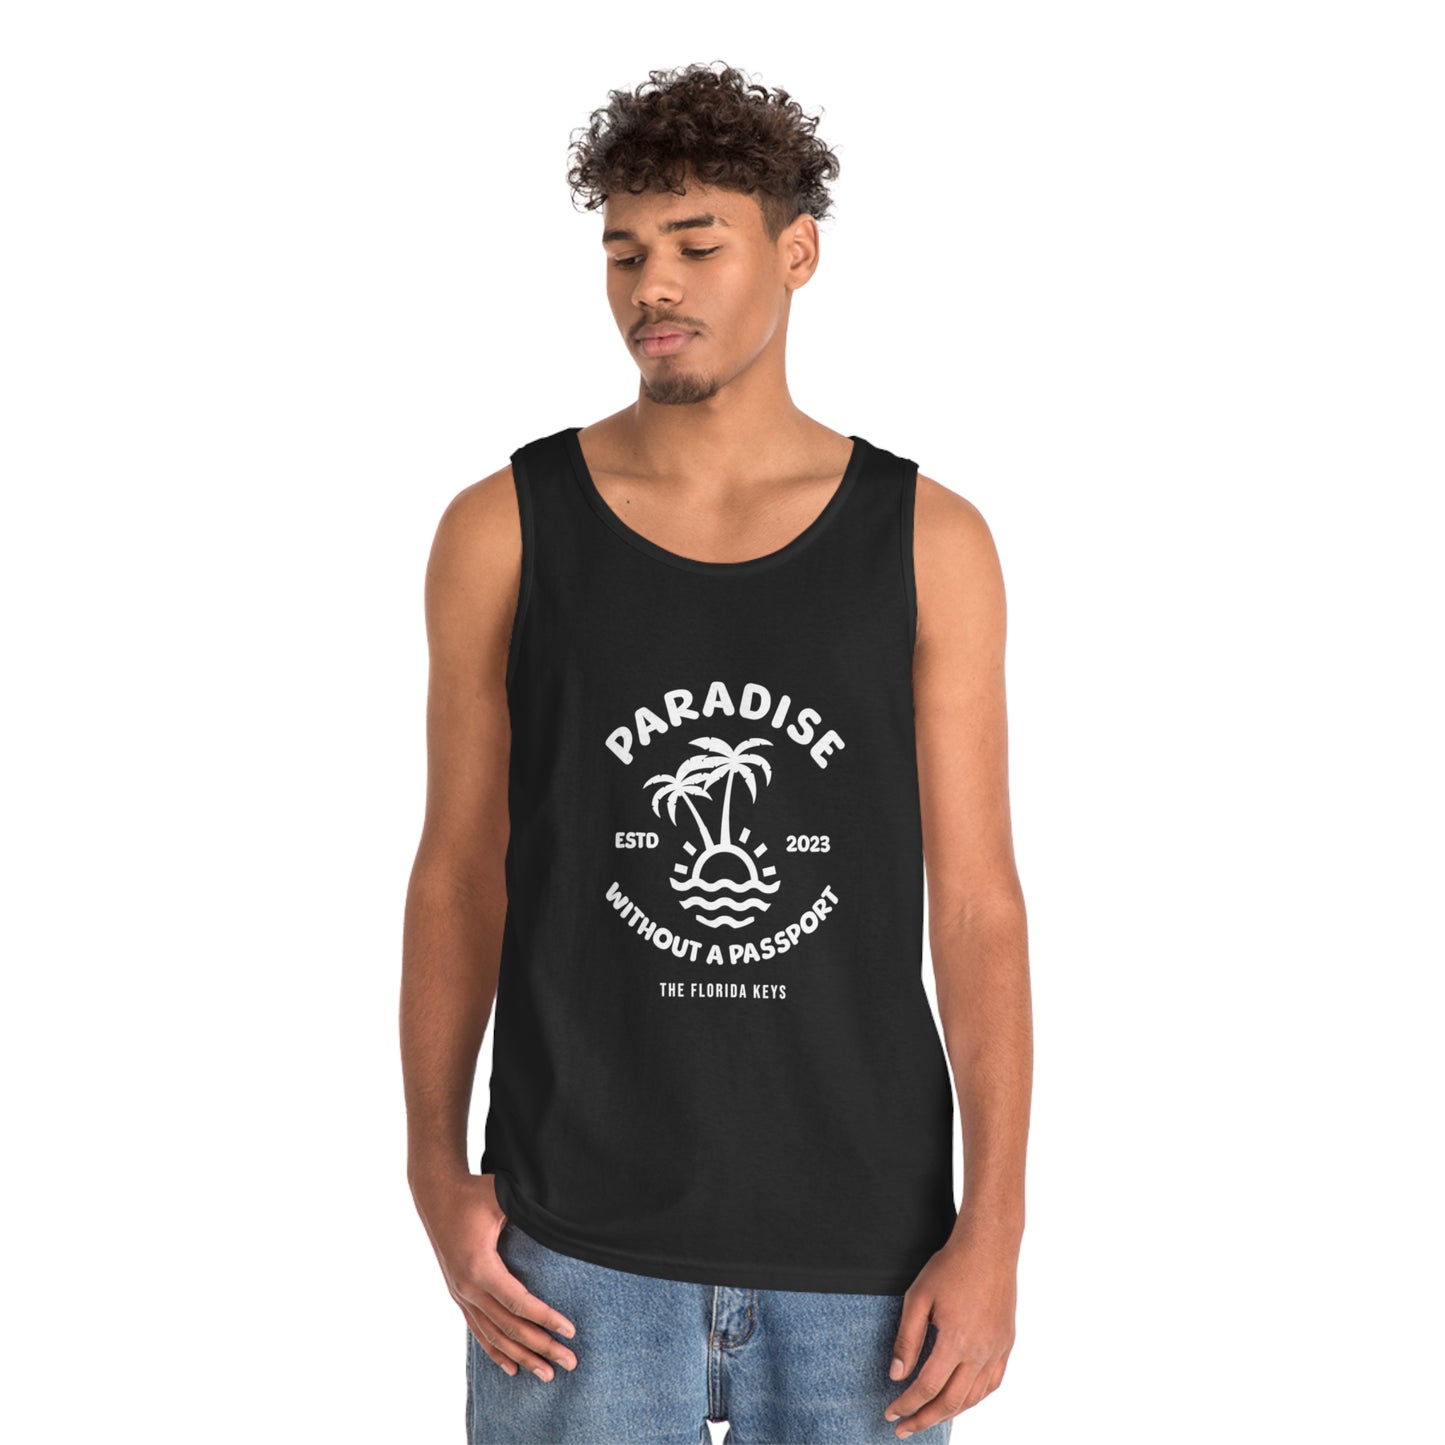 Paradise without a passport logo - Men's tank top